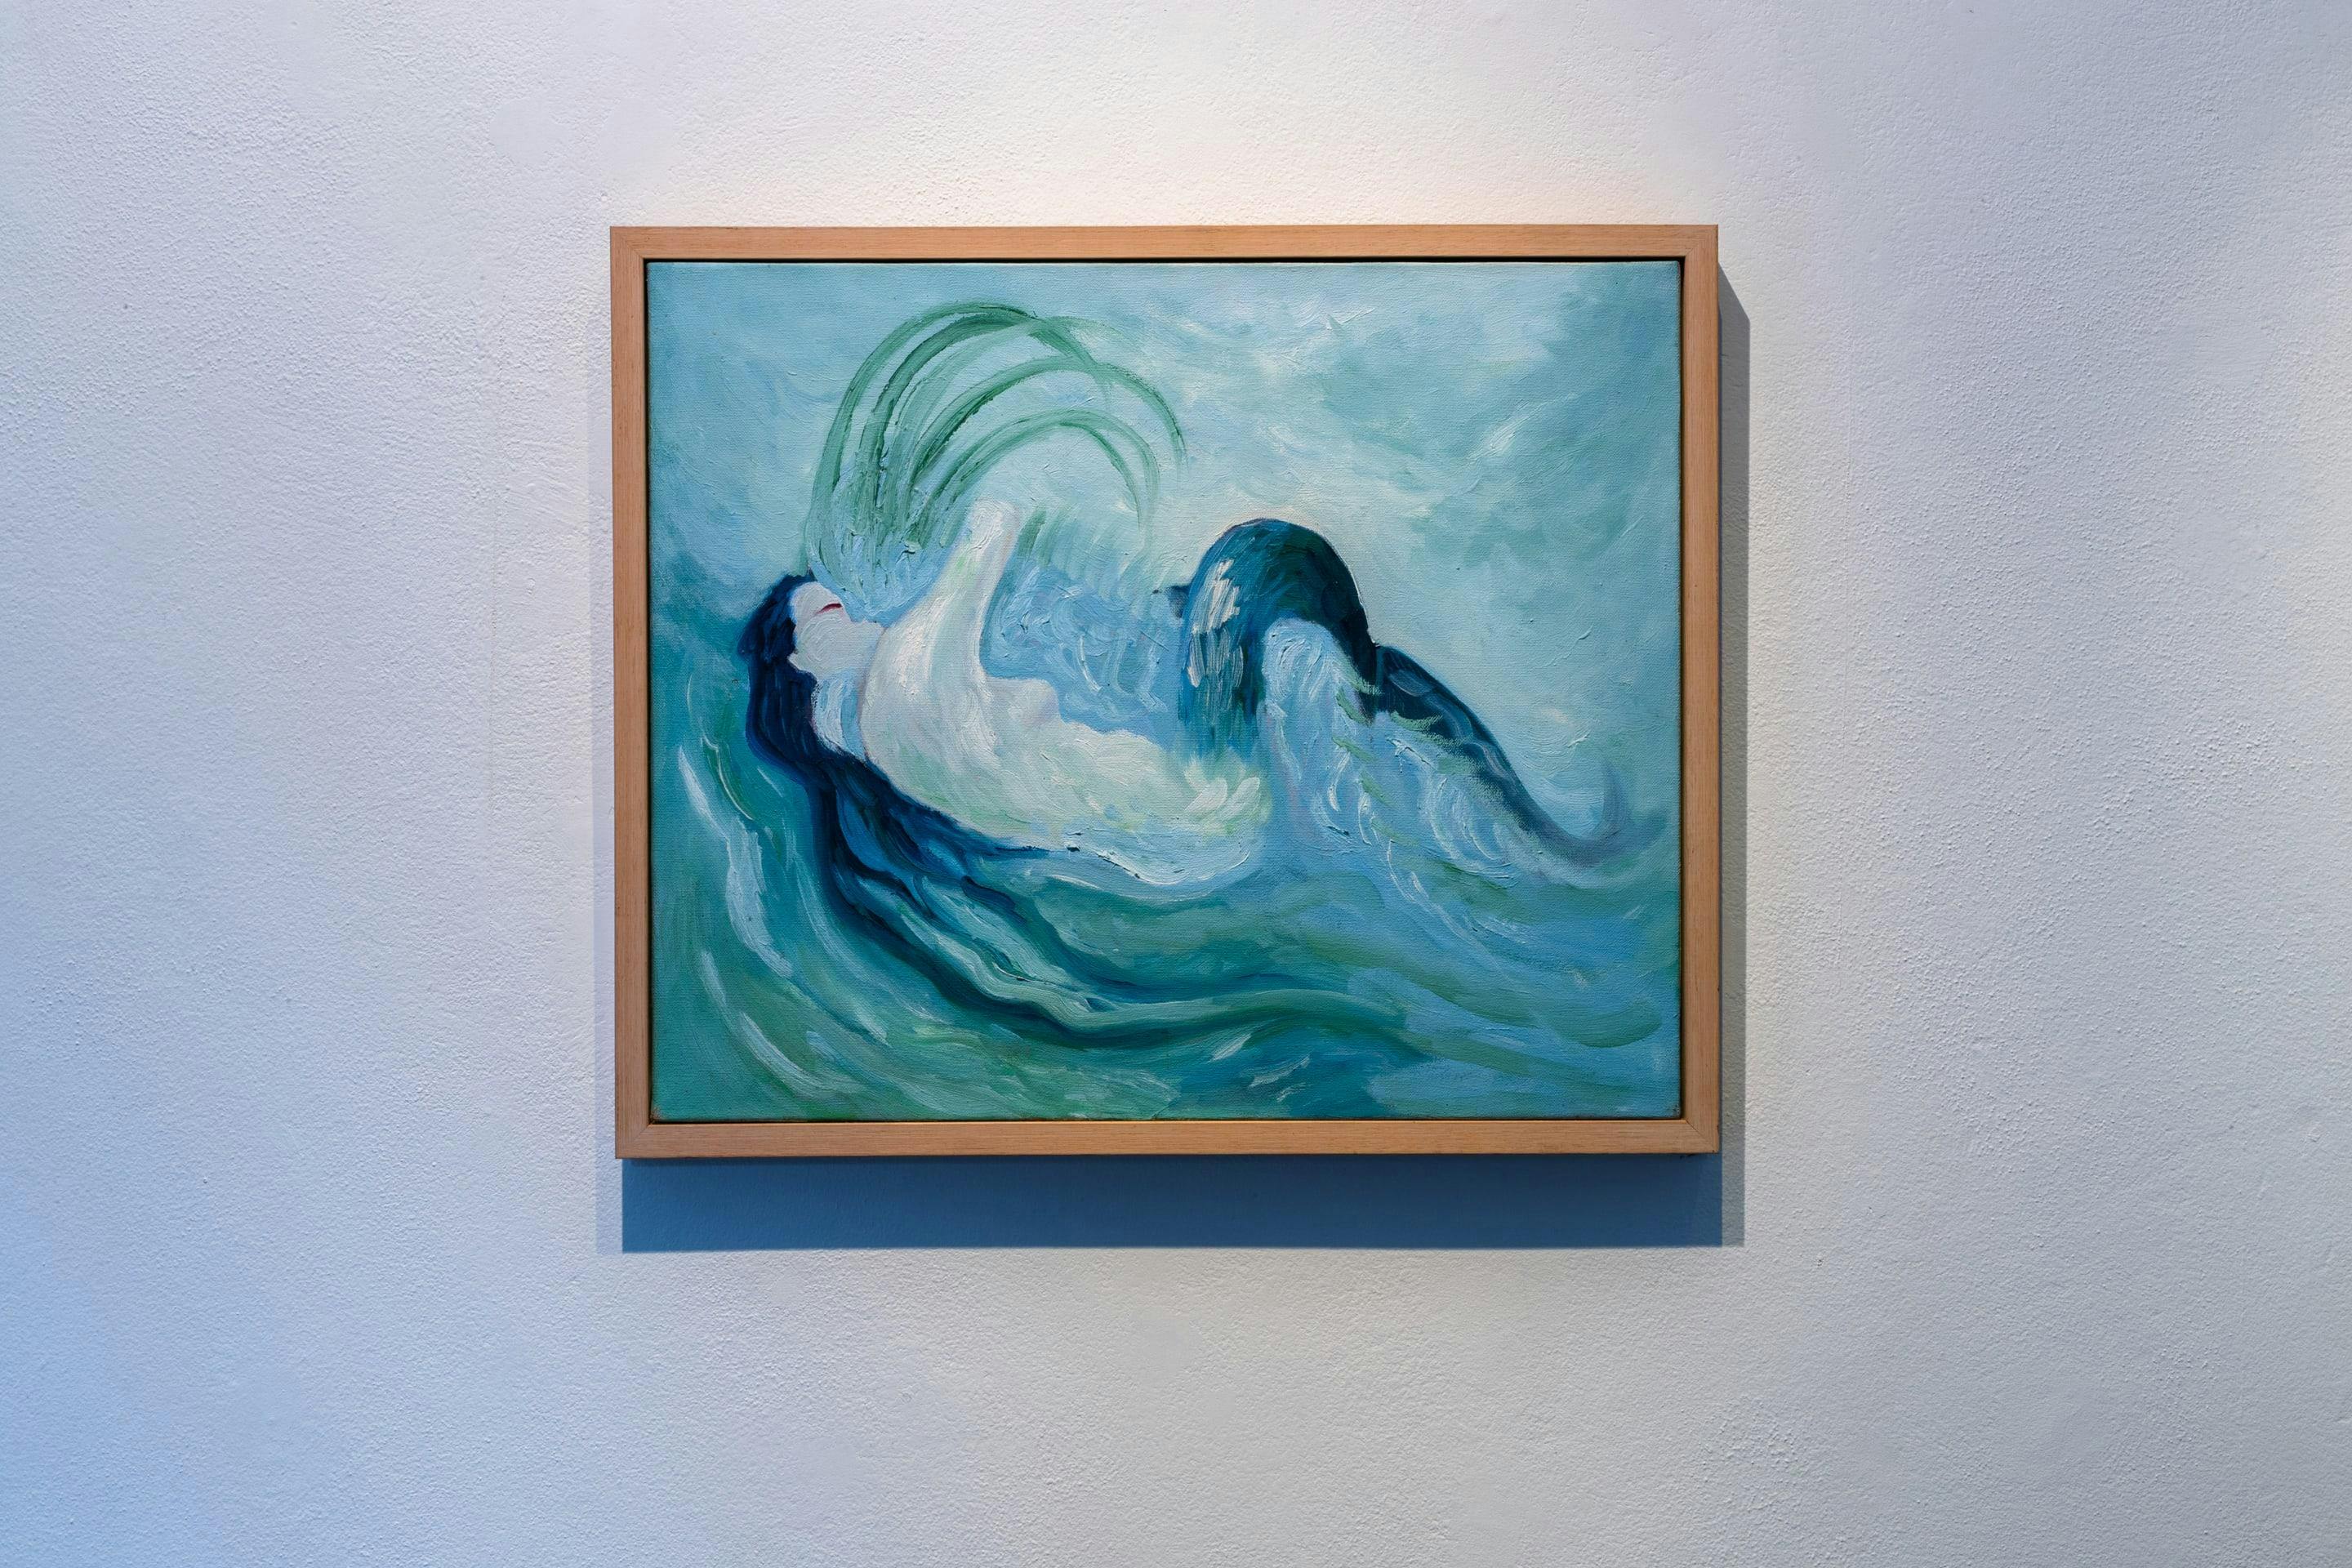 Sirens. Sirens are half mermaids and half…, by Alexis Burke